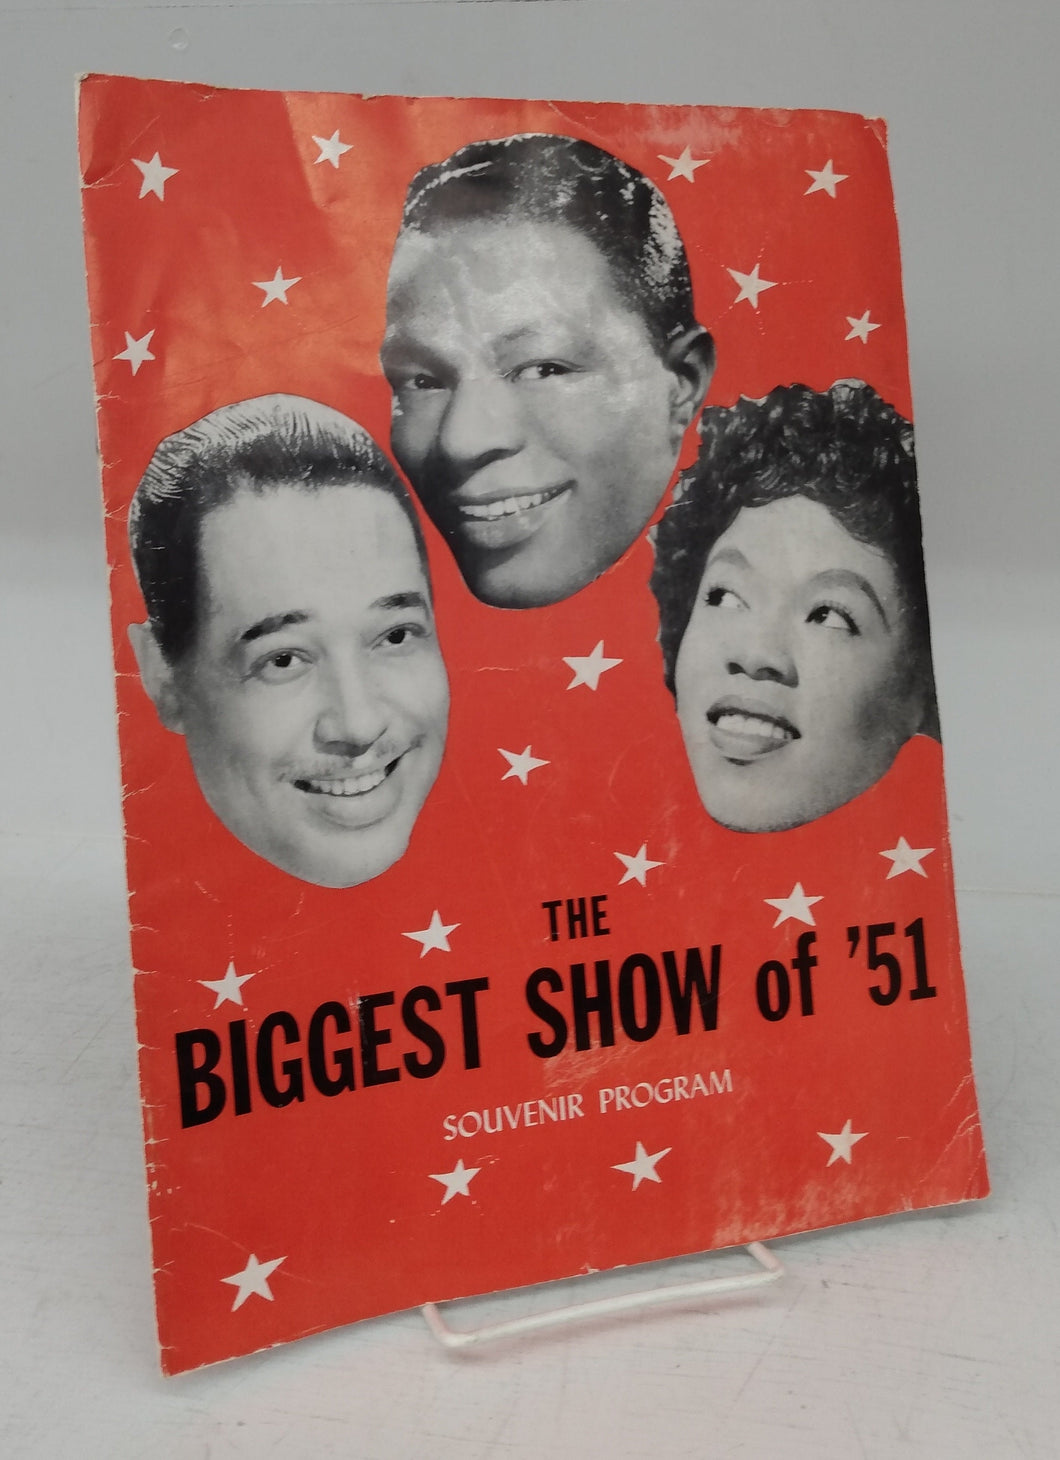 The Biggest Sbow of '51 Souvenir Program